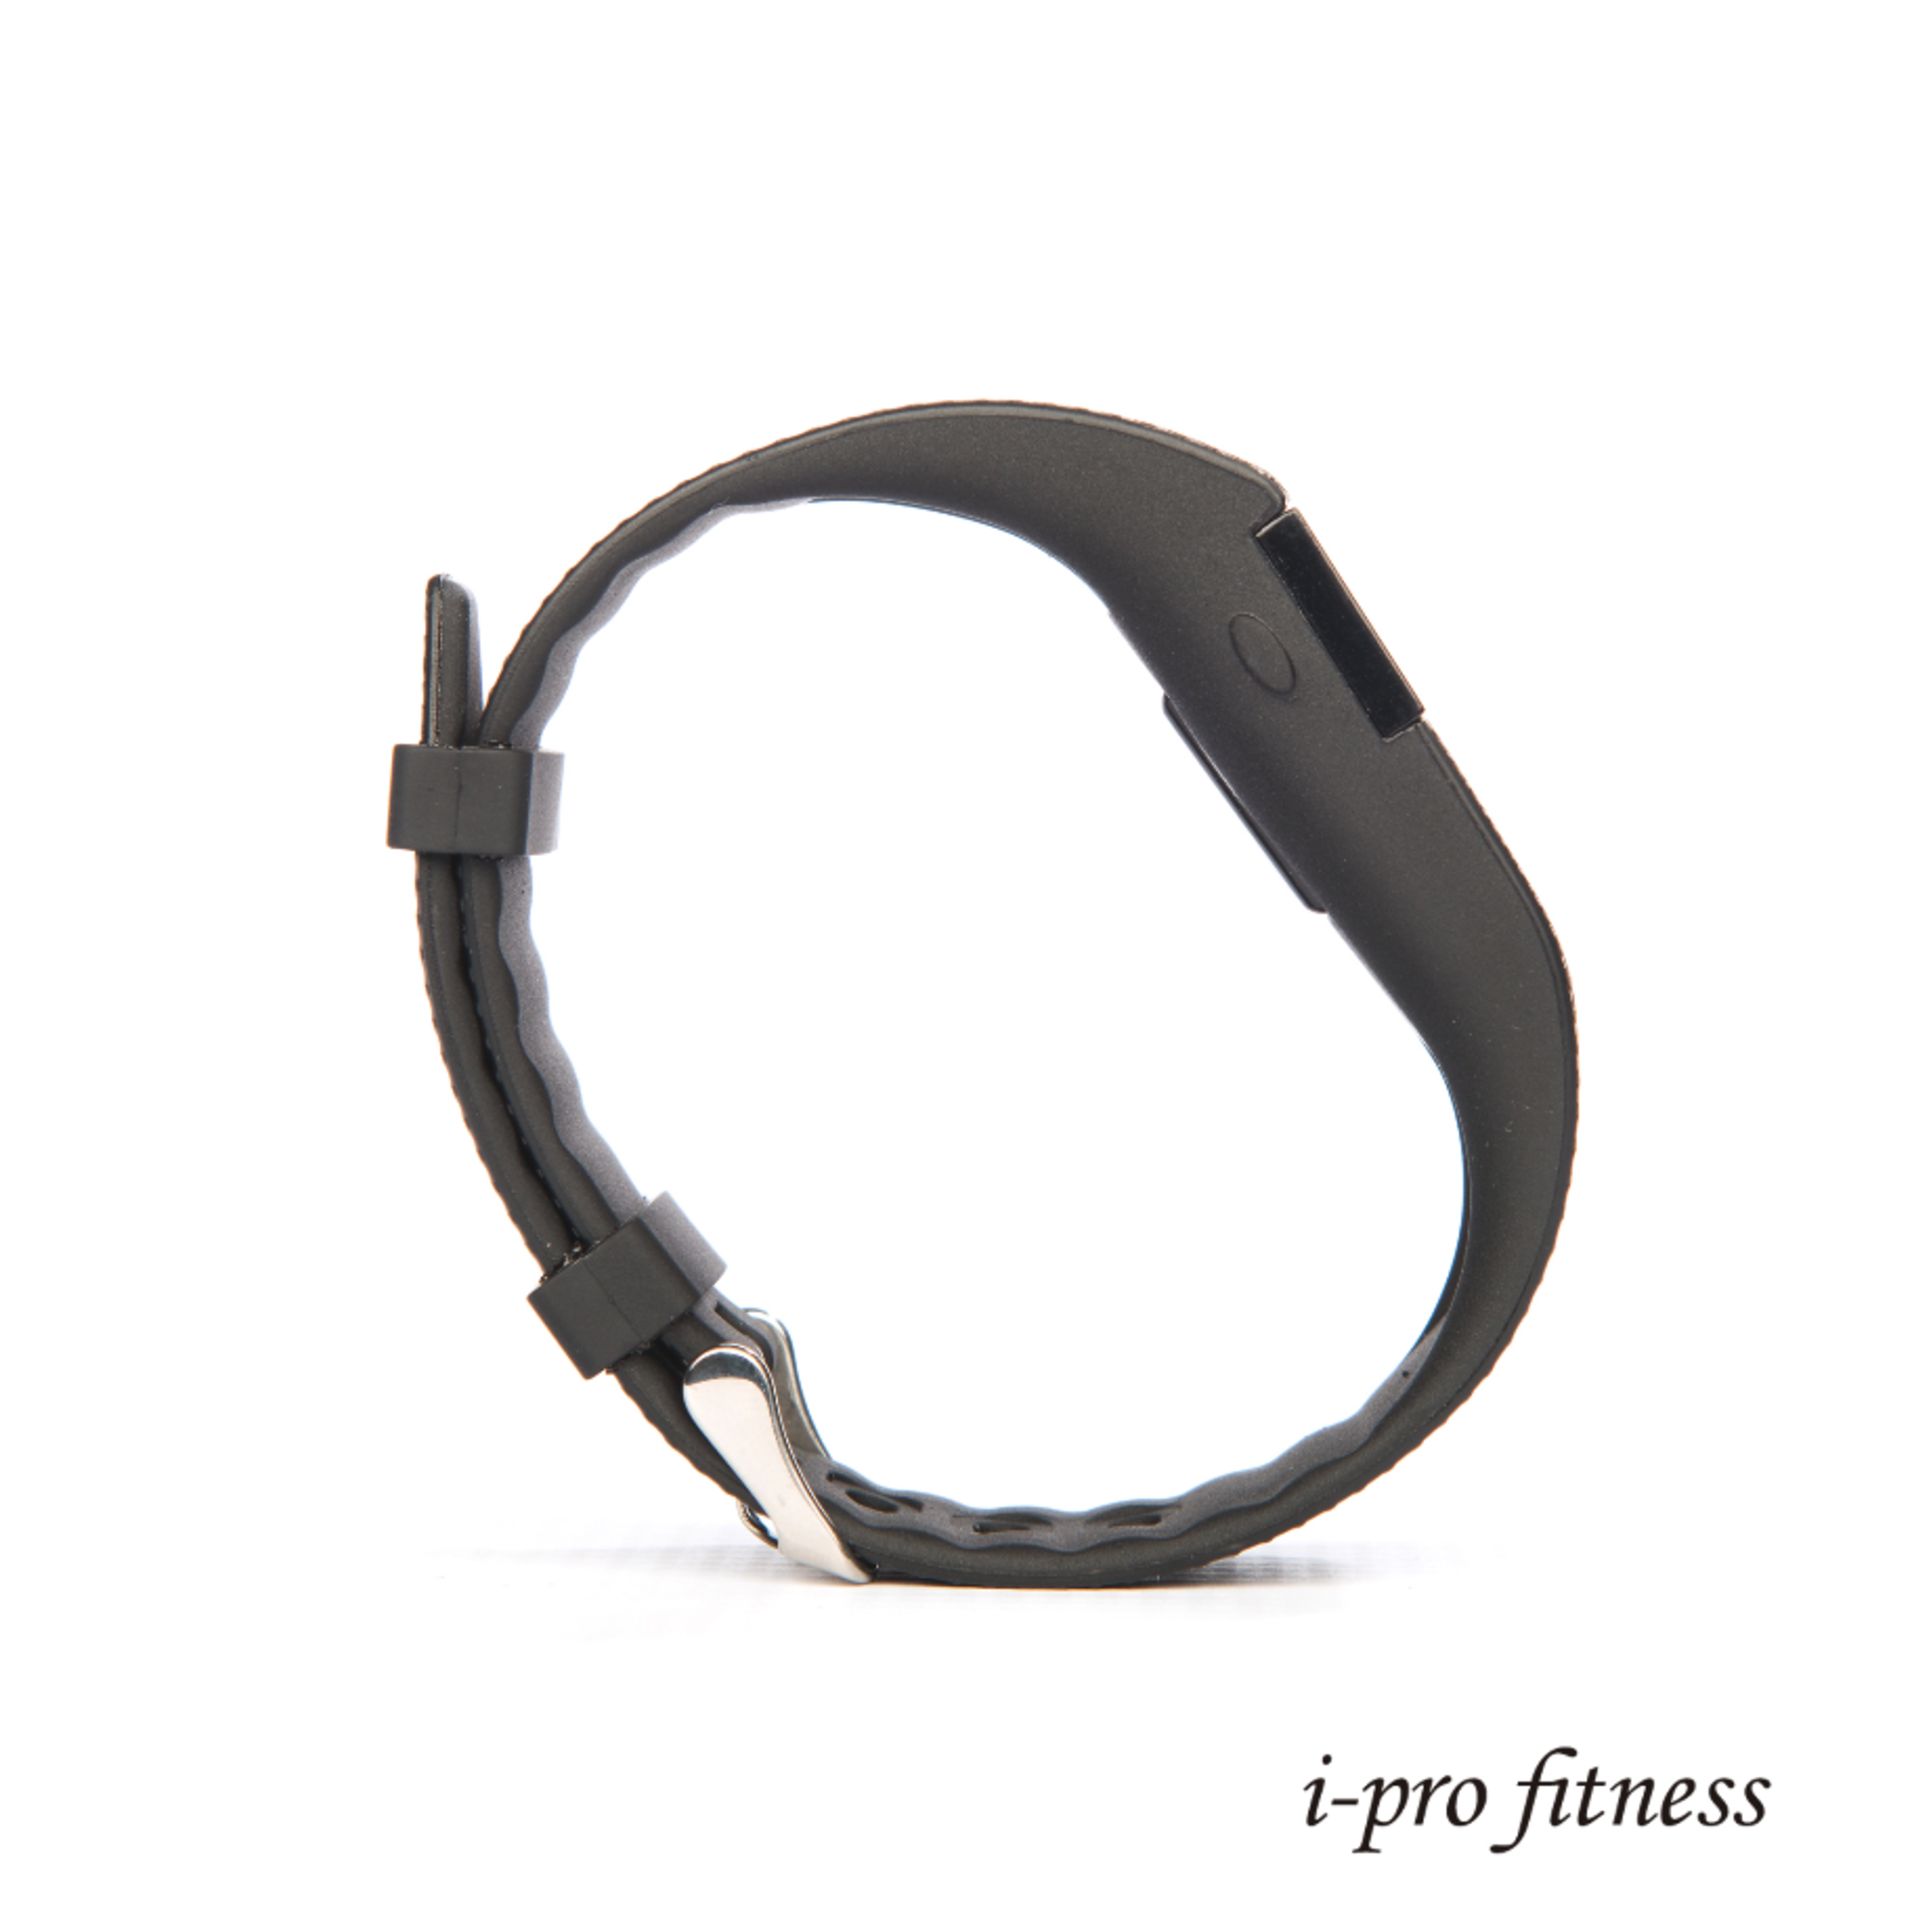 ***Trade lot 50 x Units Fitness Tracker i-pro fitness, Bluetooth 4.0 Sports Smart Bracelet*** - Image 8 of 8